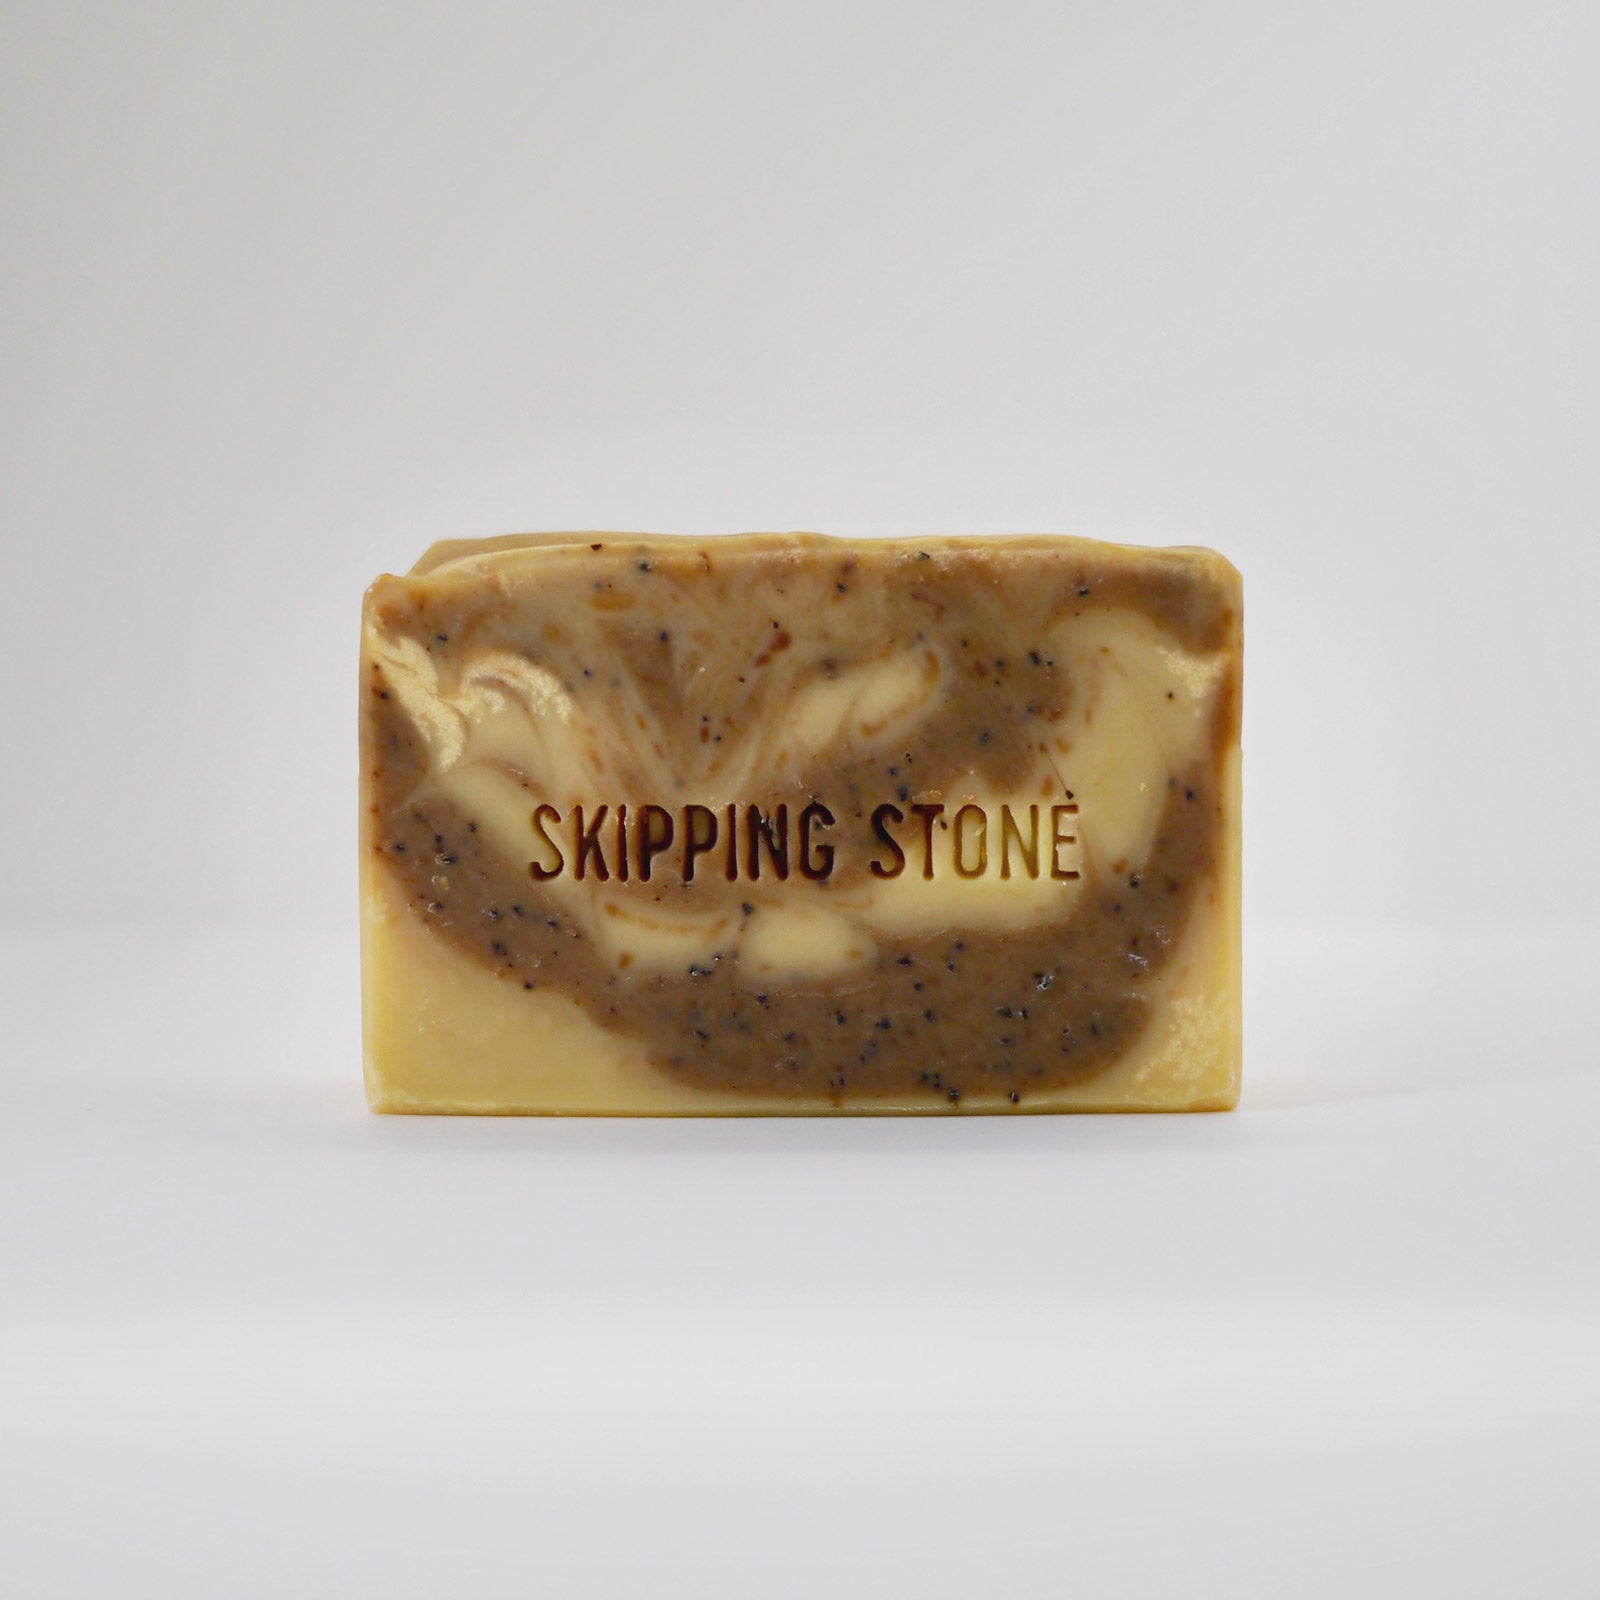 Skipping Stone Soap Coffee Shop Hand + Body Scrub Soap